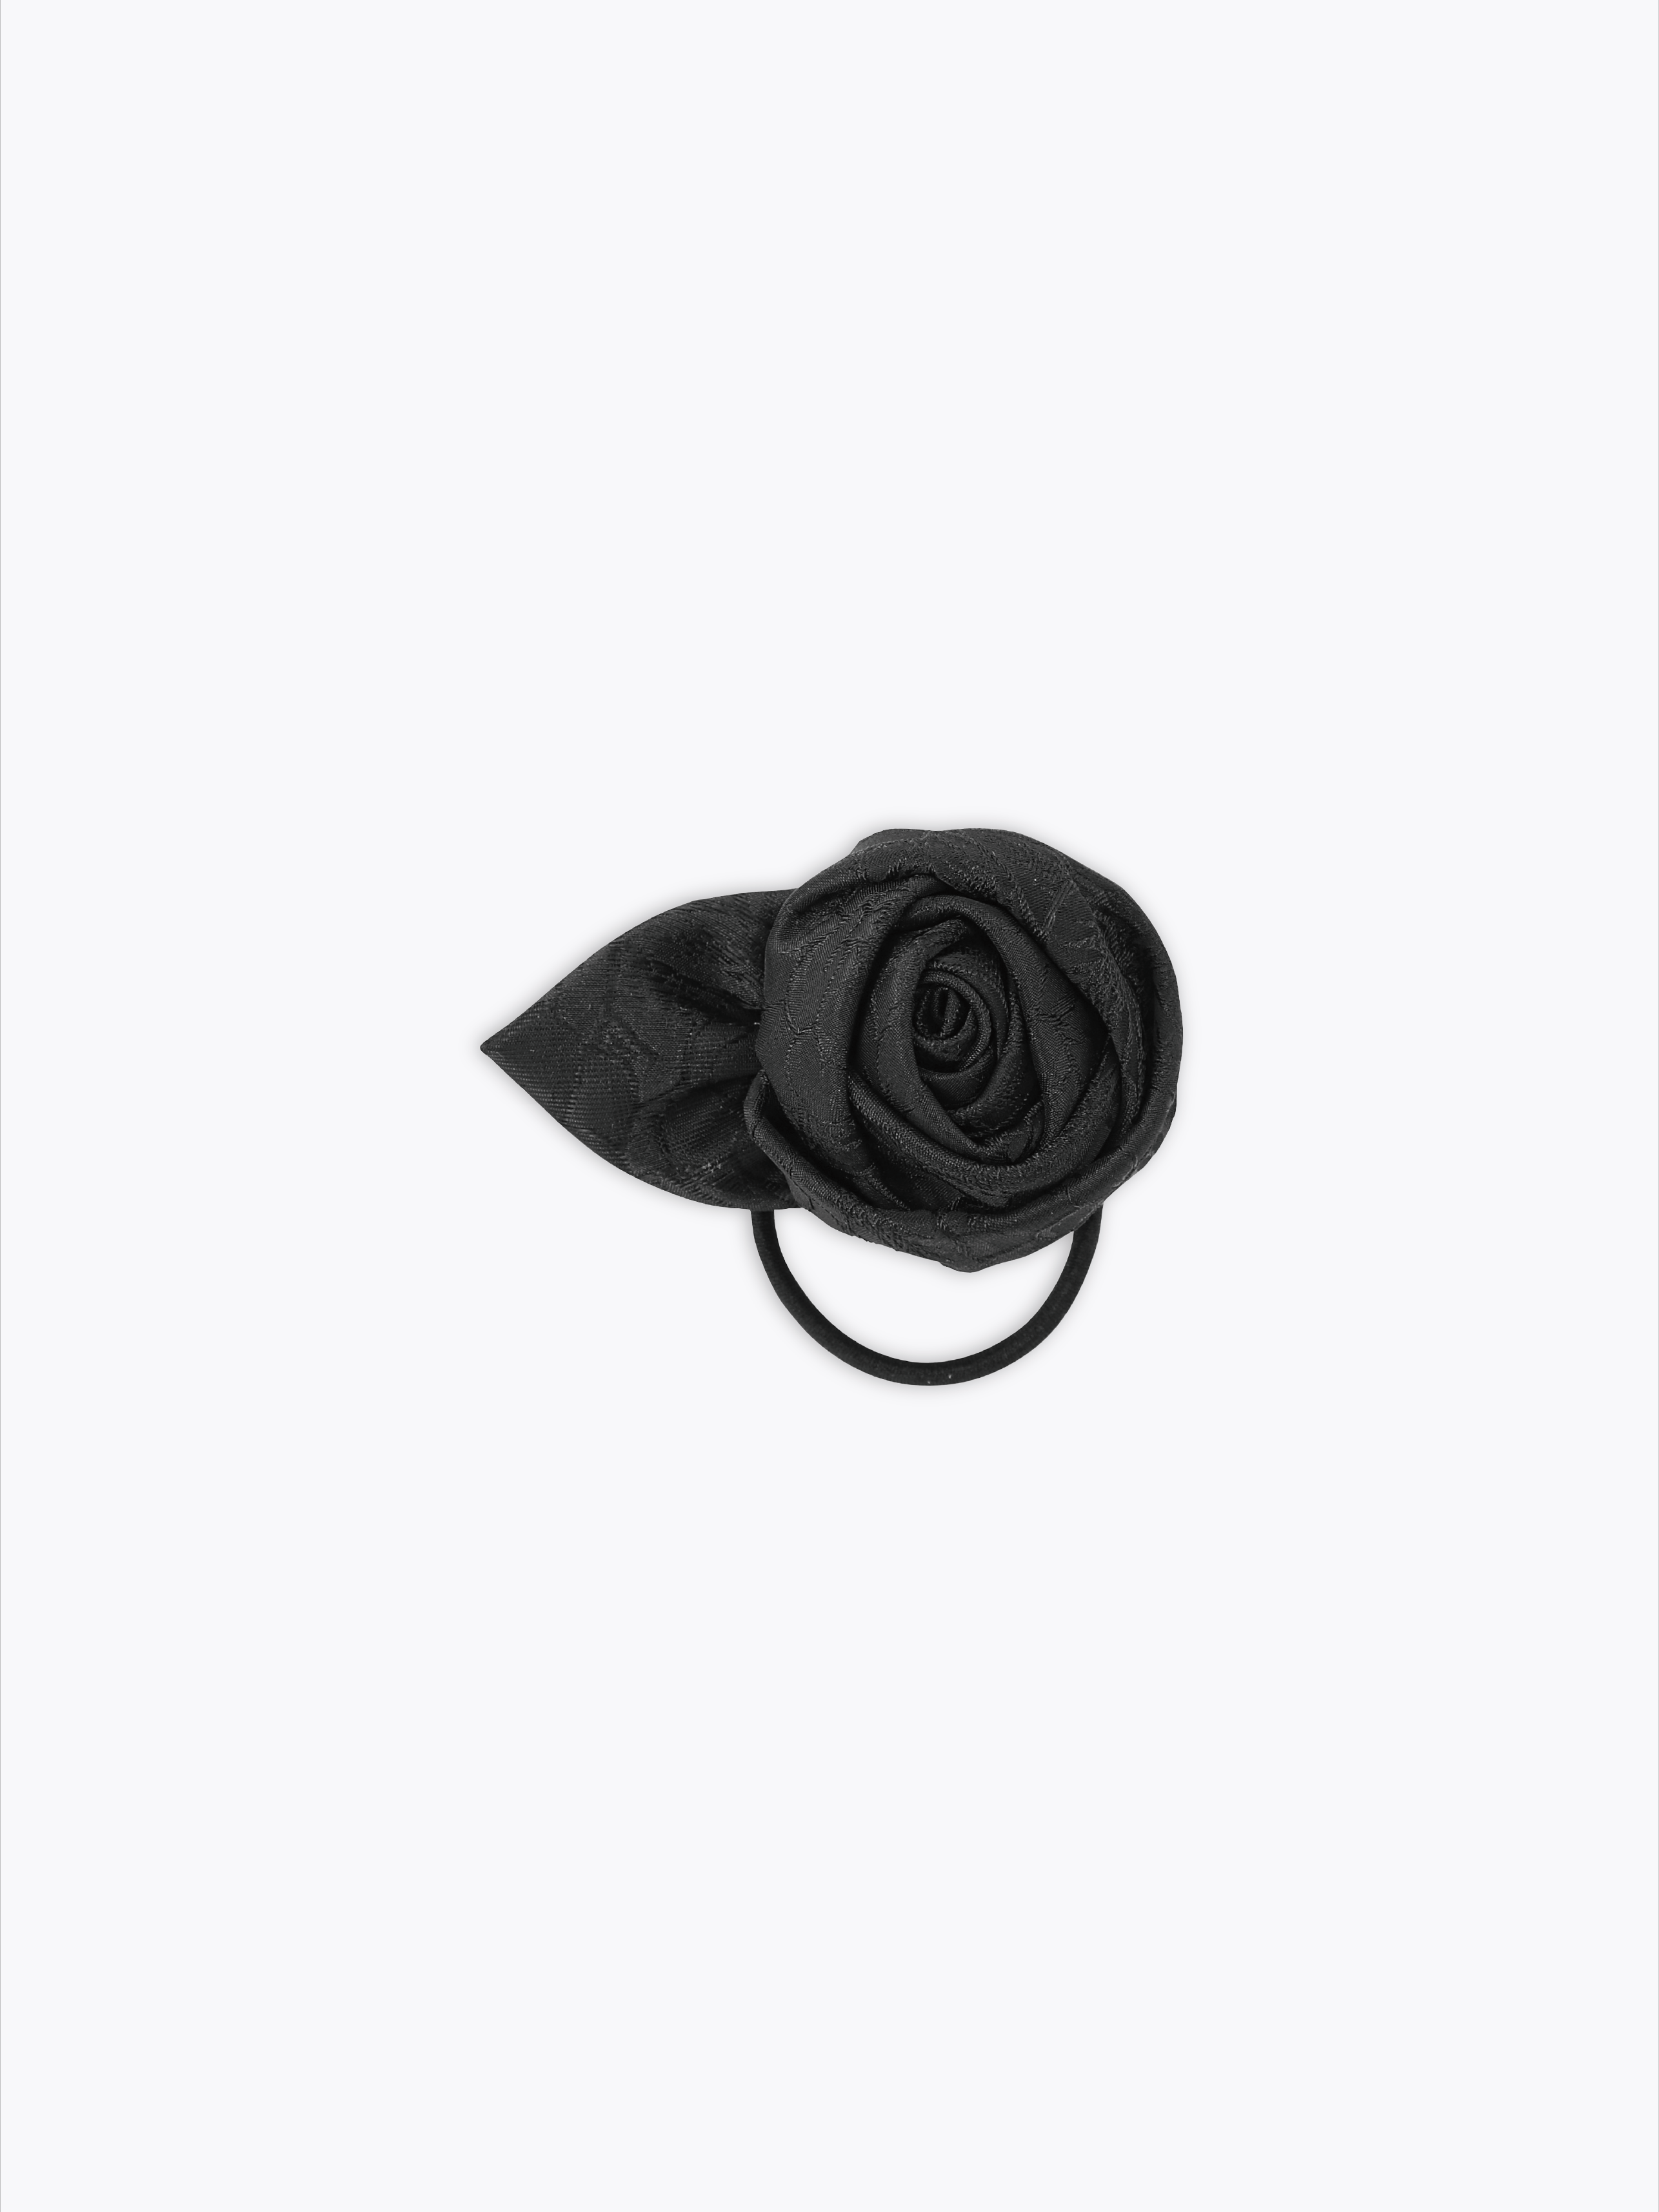 Rose Rosy Hair Tie - Night Black